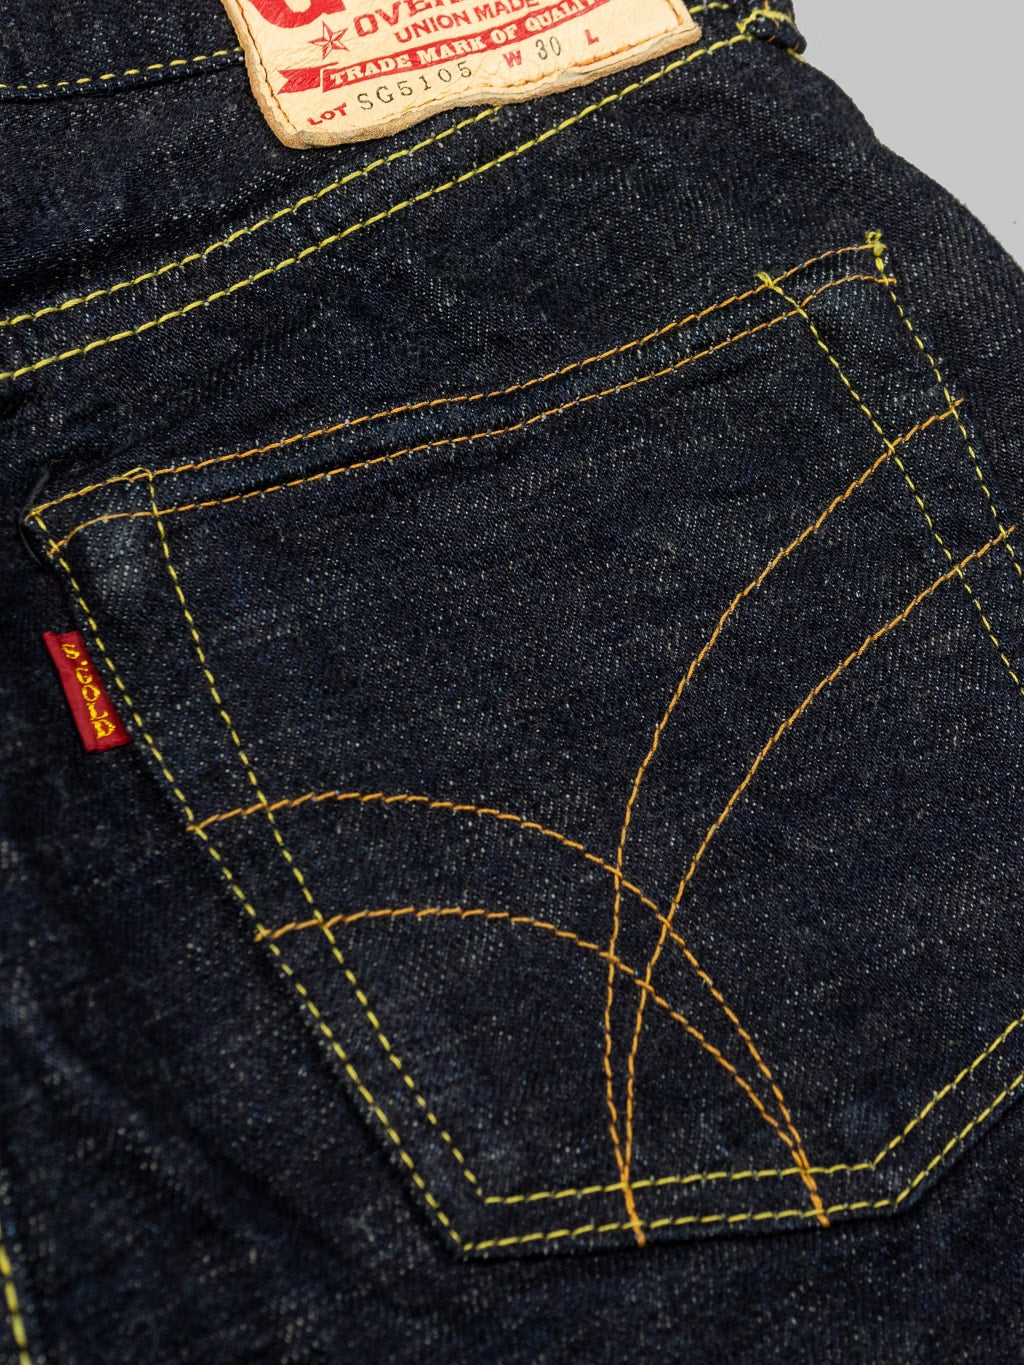 The Strike Gold Slub Weft Slim Jeans fit stitching design